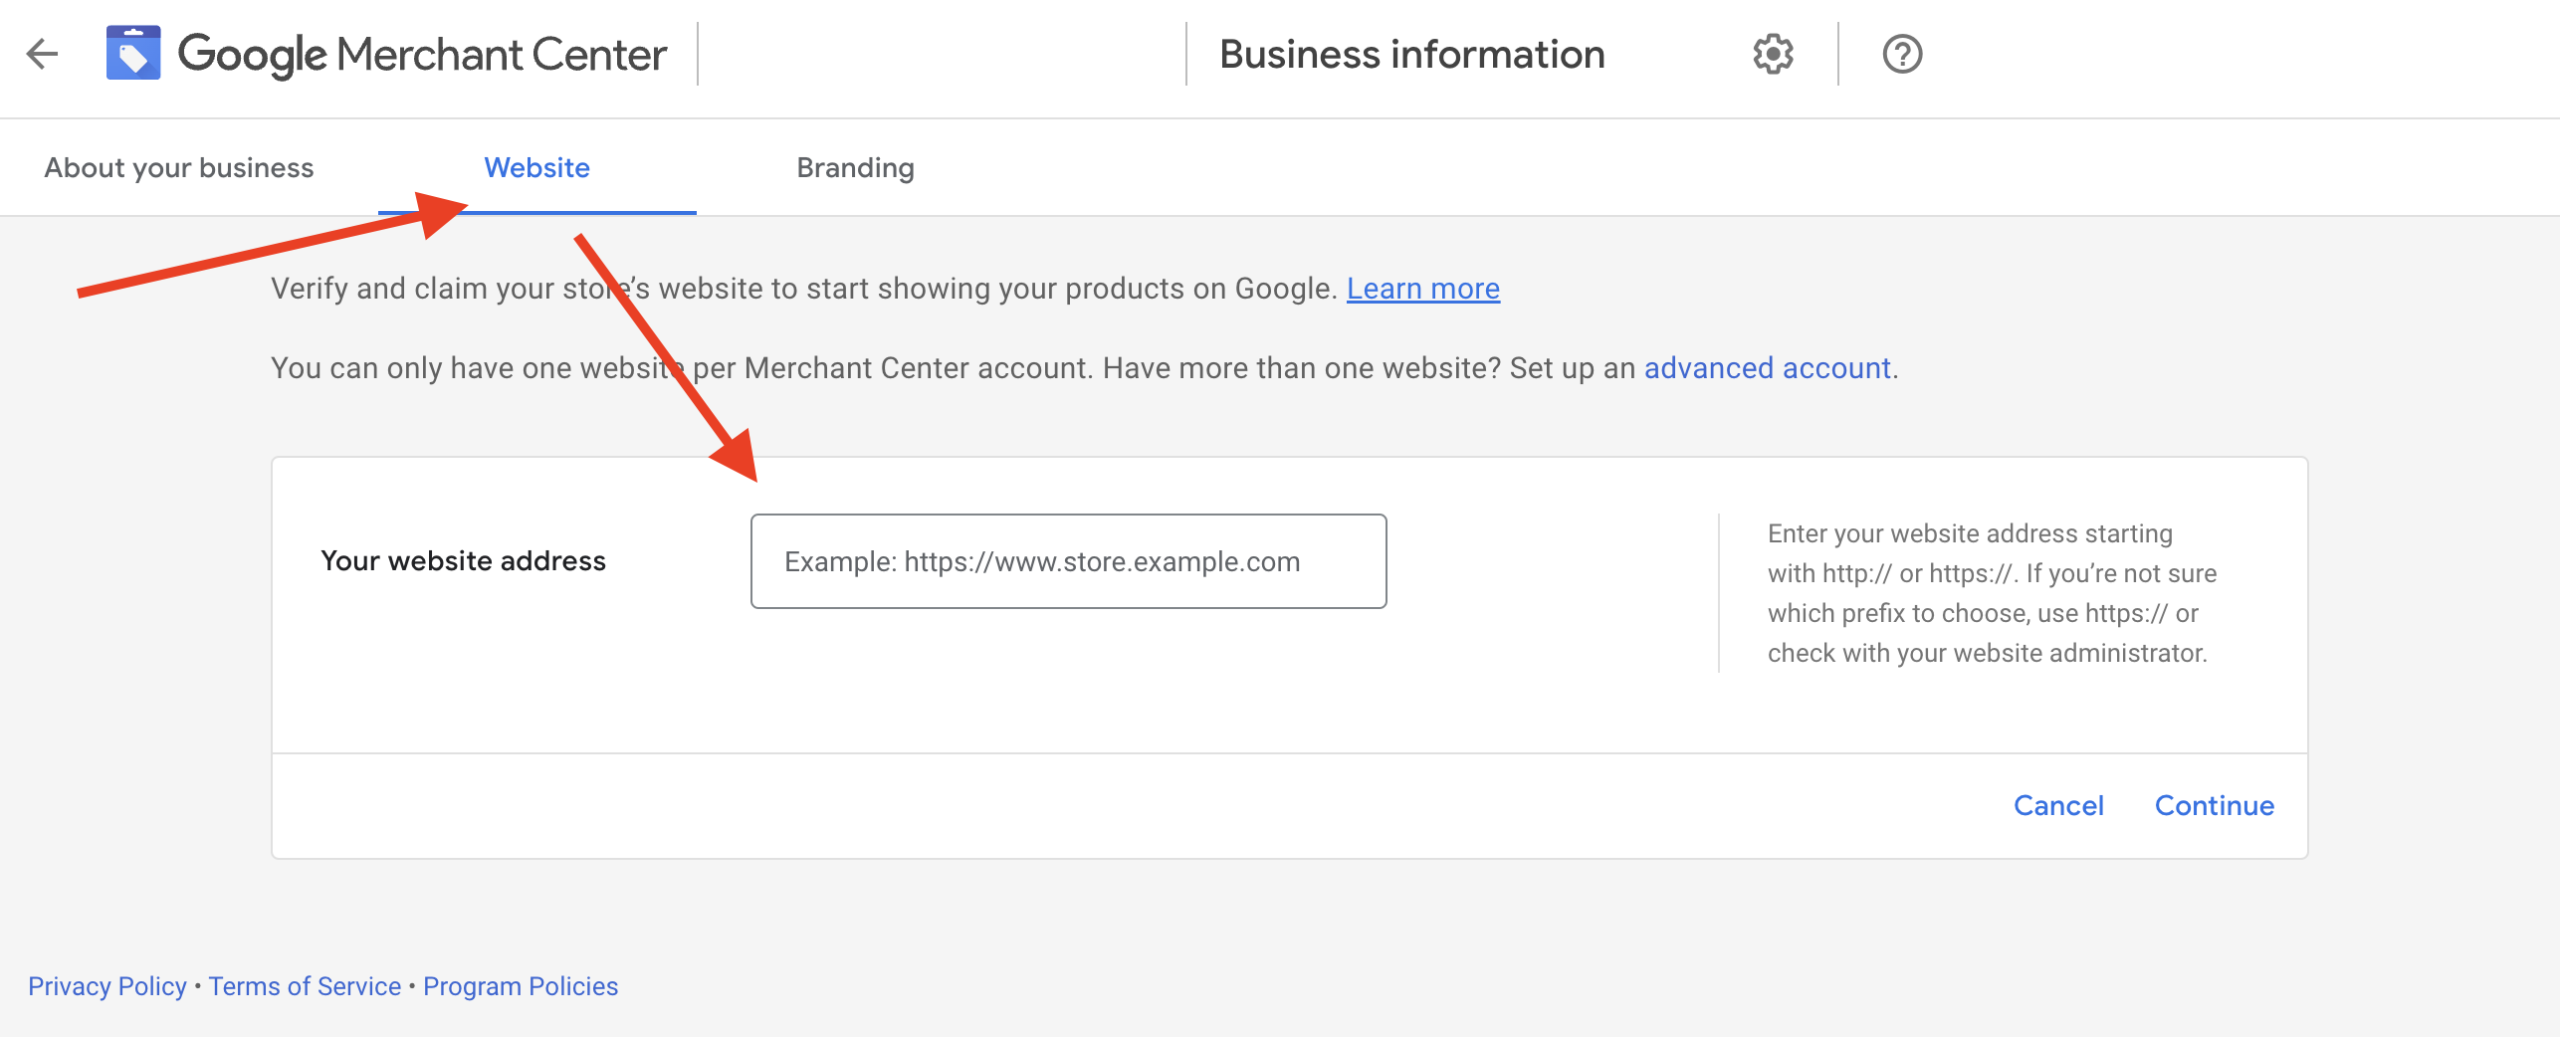 Screen shot of varify website process in Google Merchant Center interface with annotations